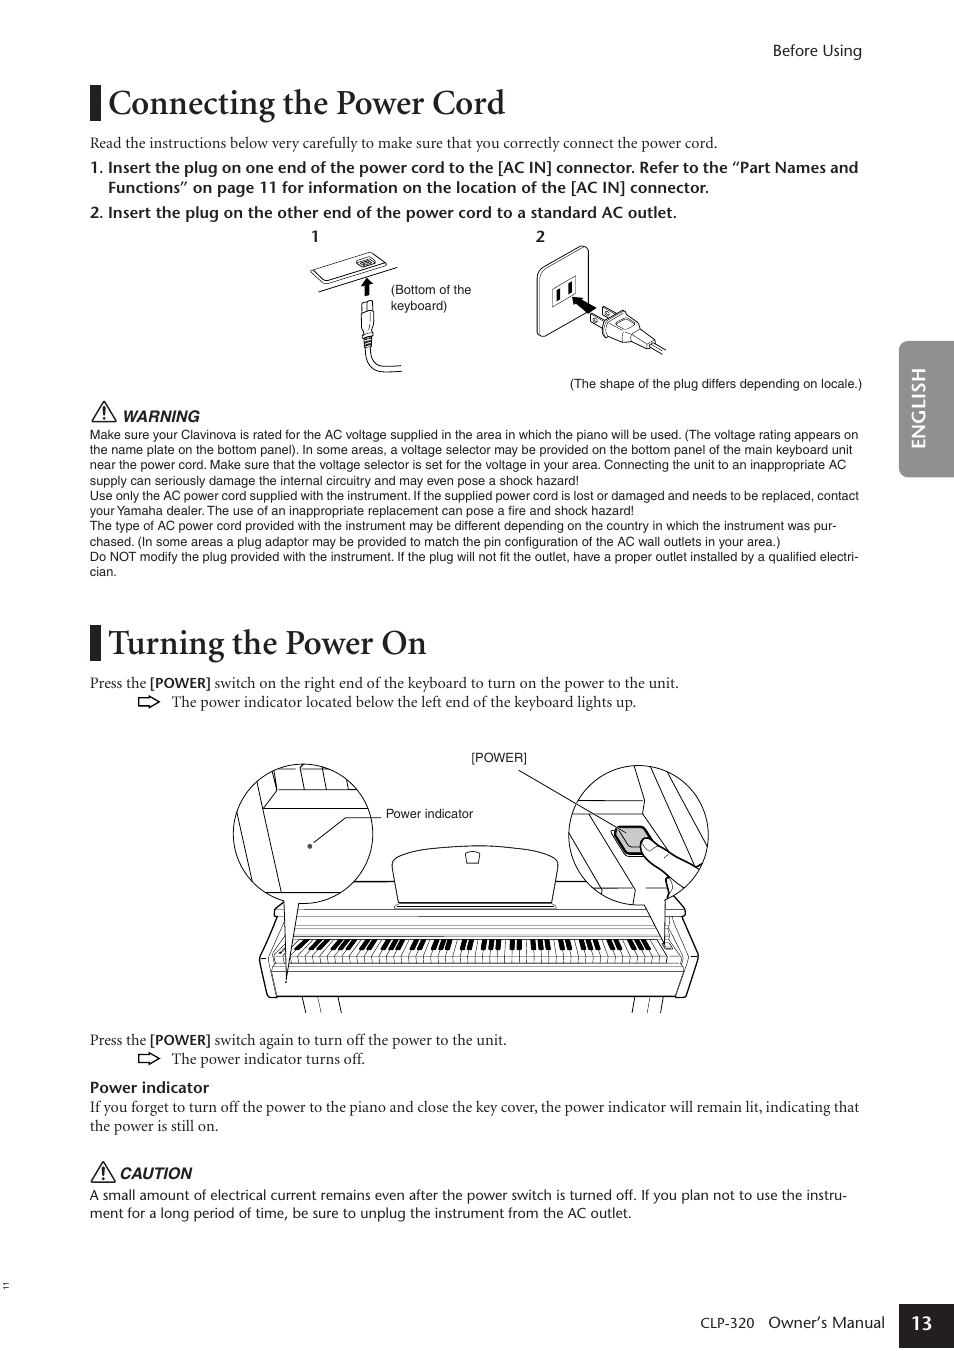 Connecting the power cord, Turning the power on | Yamaha Clavinova CLP